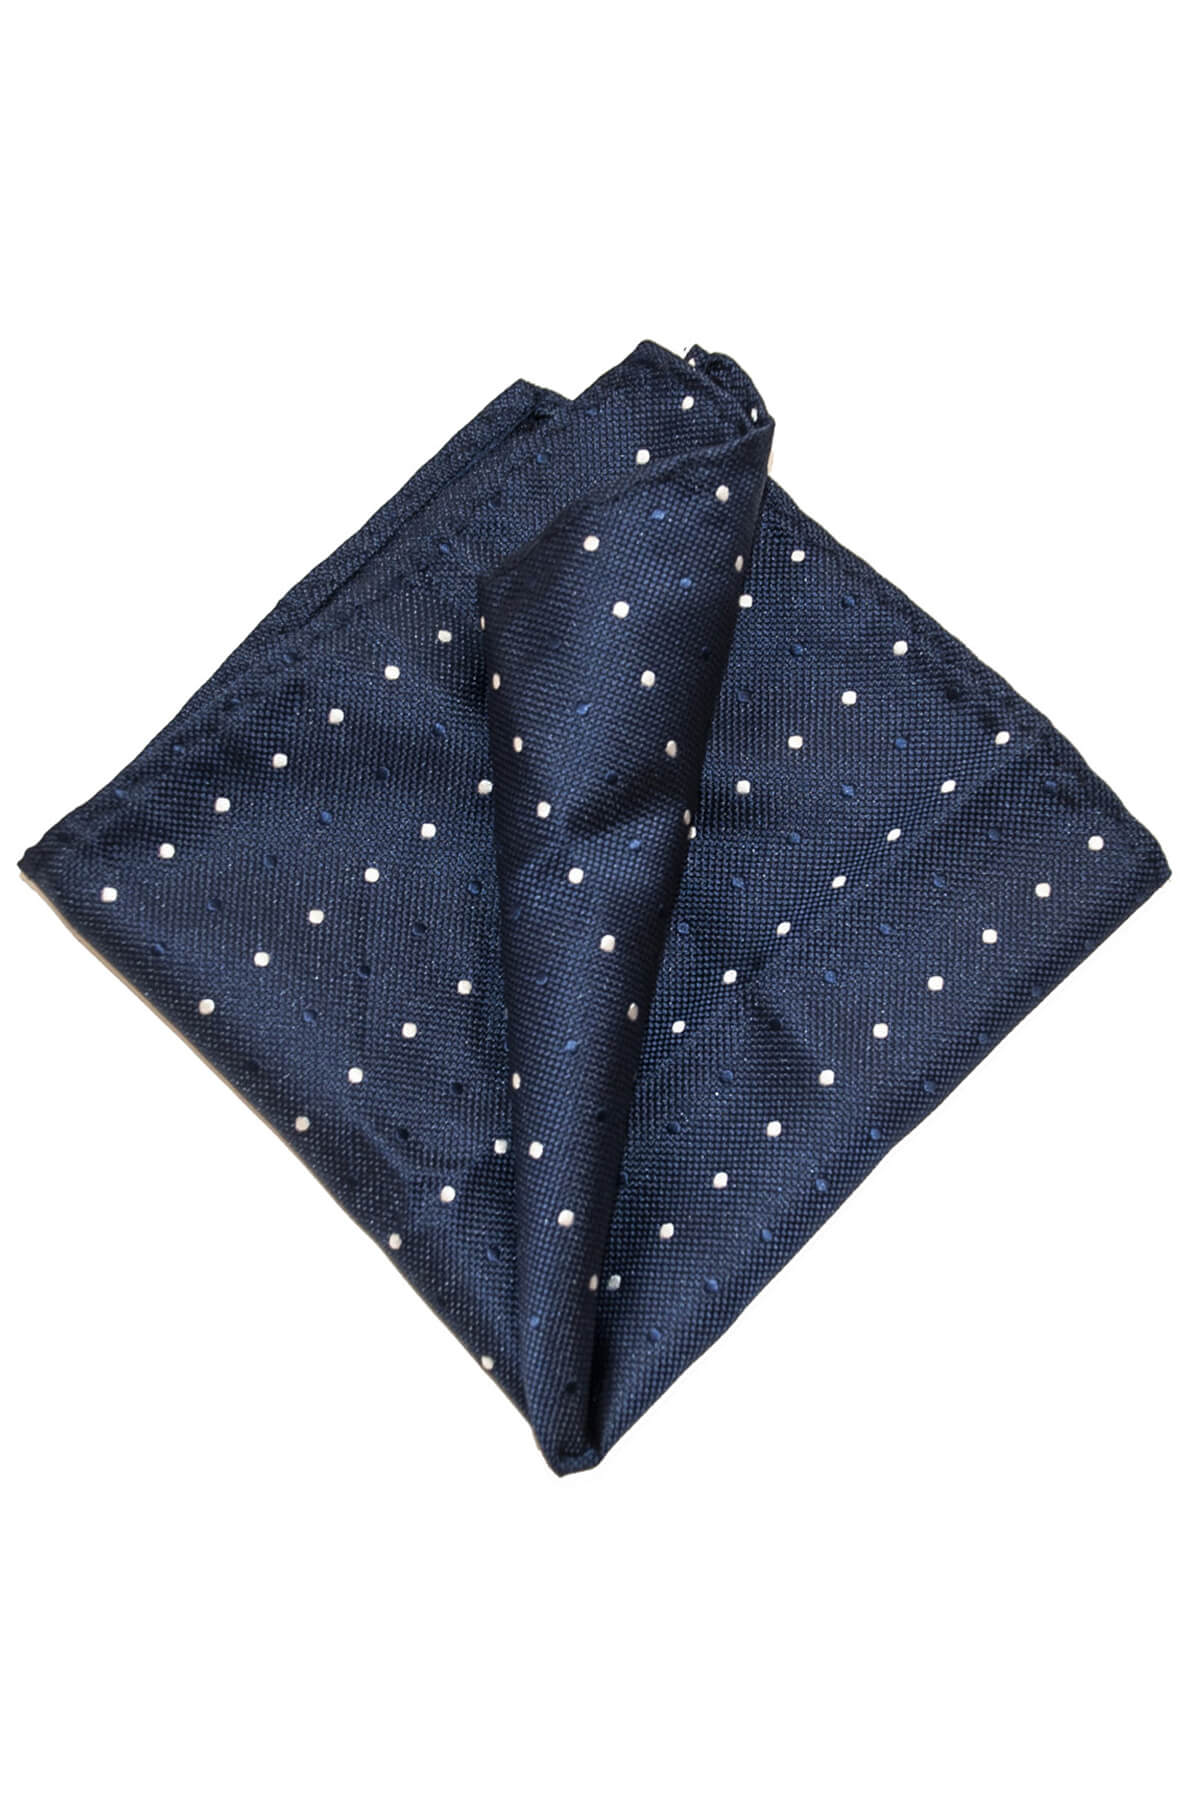 Leonardo Uomo Polka Printed Tie